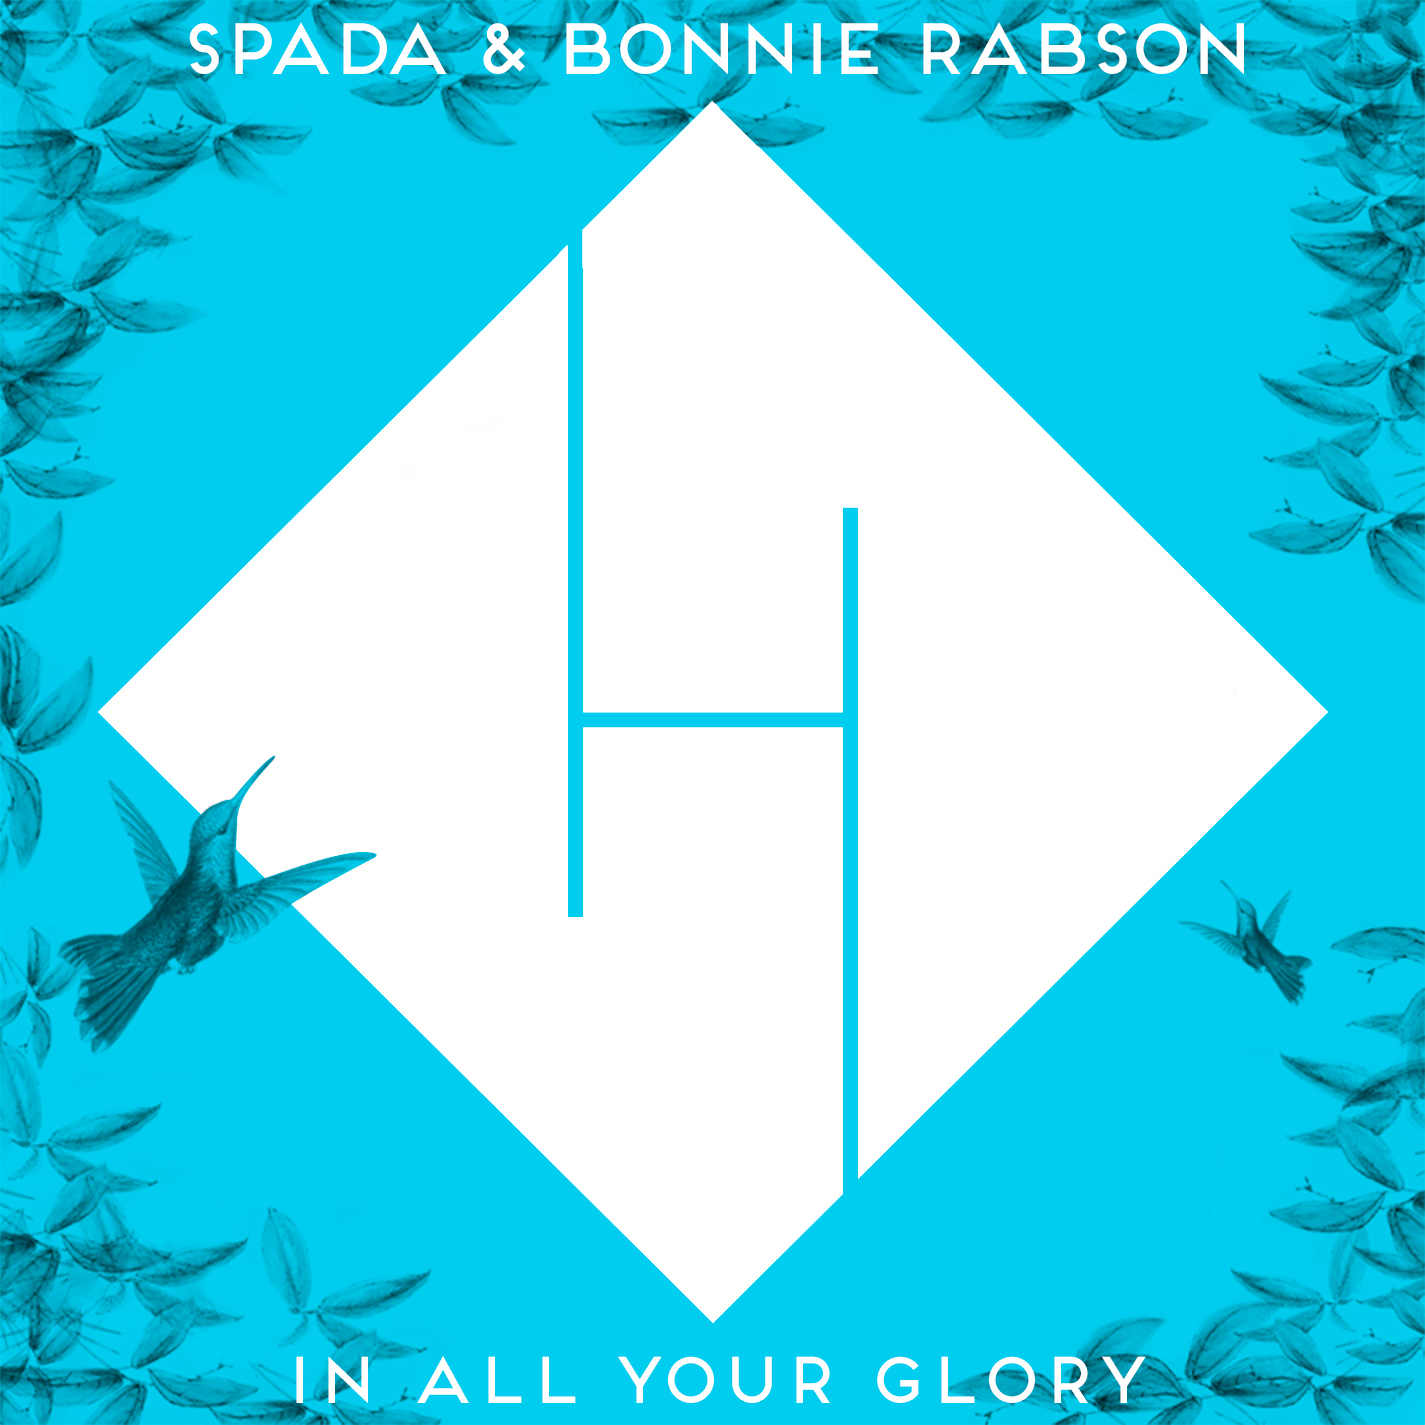 Aflaai In All Your Glory - Spada & Bonnie Rabson (Remix Boris Brejcha) PREVIEW